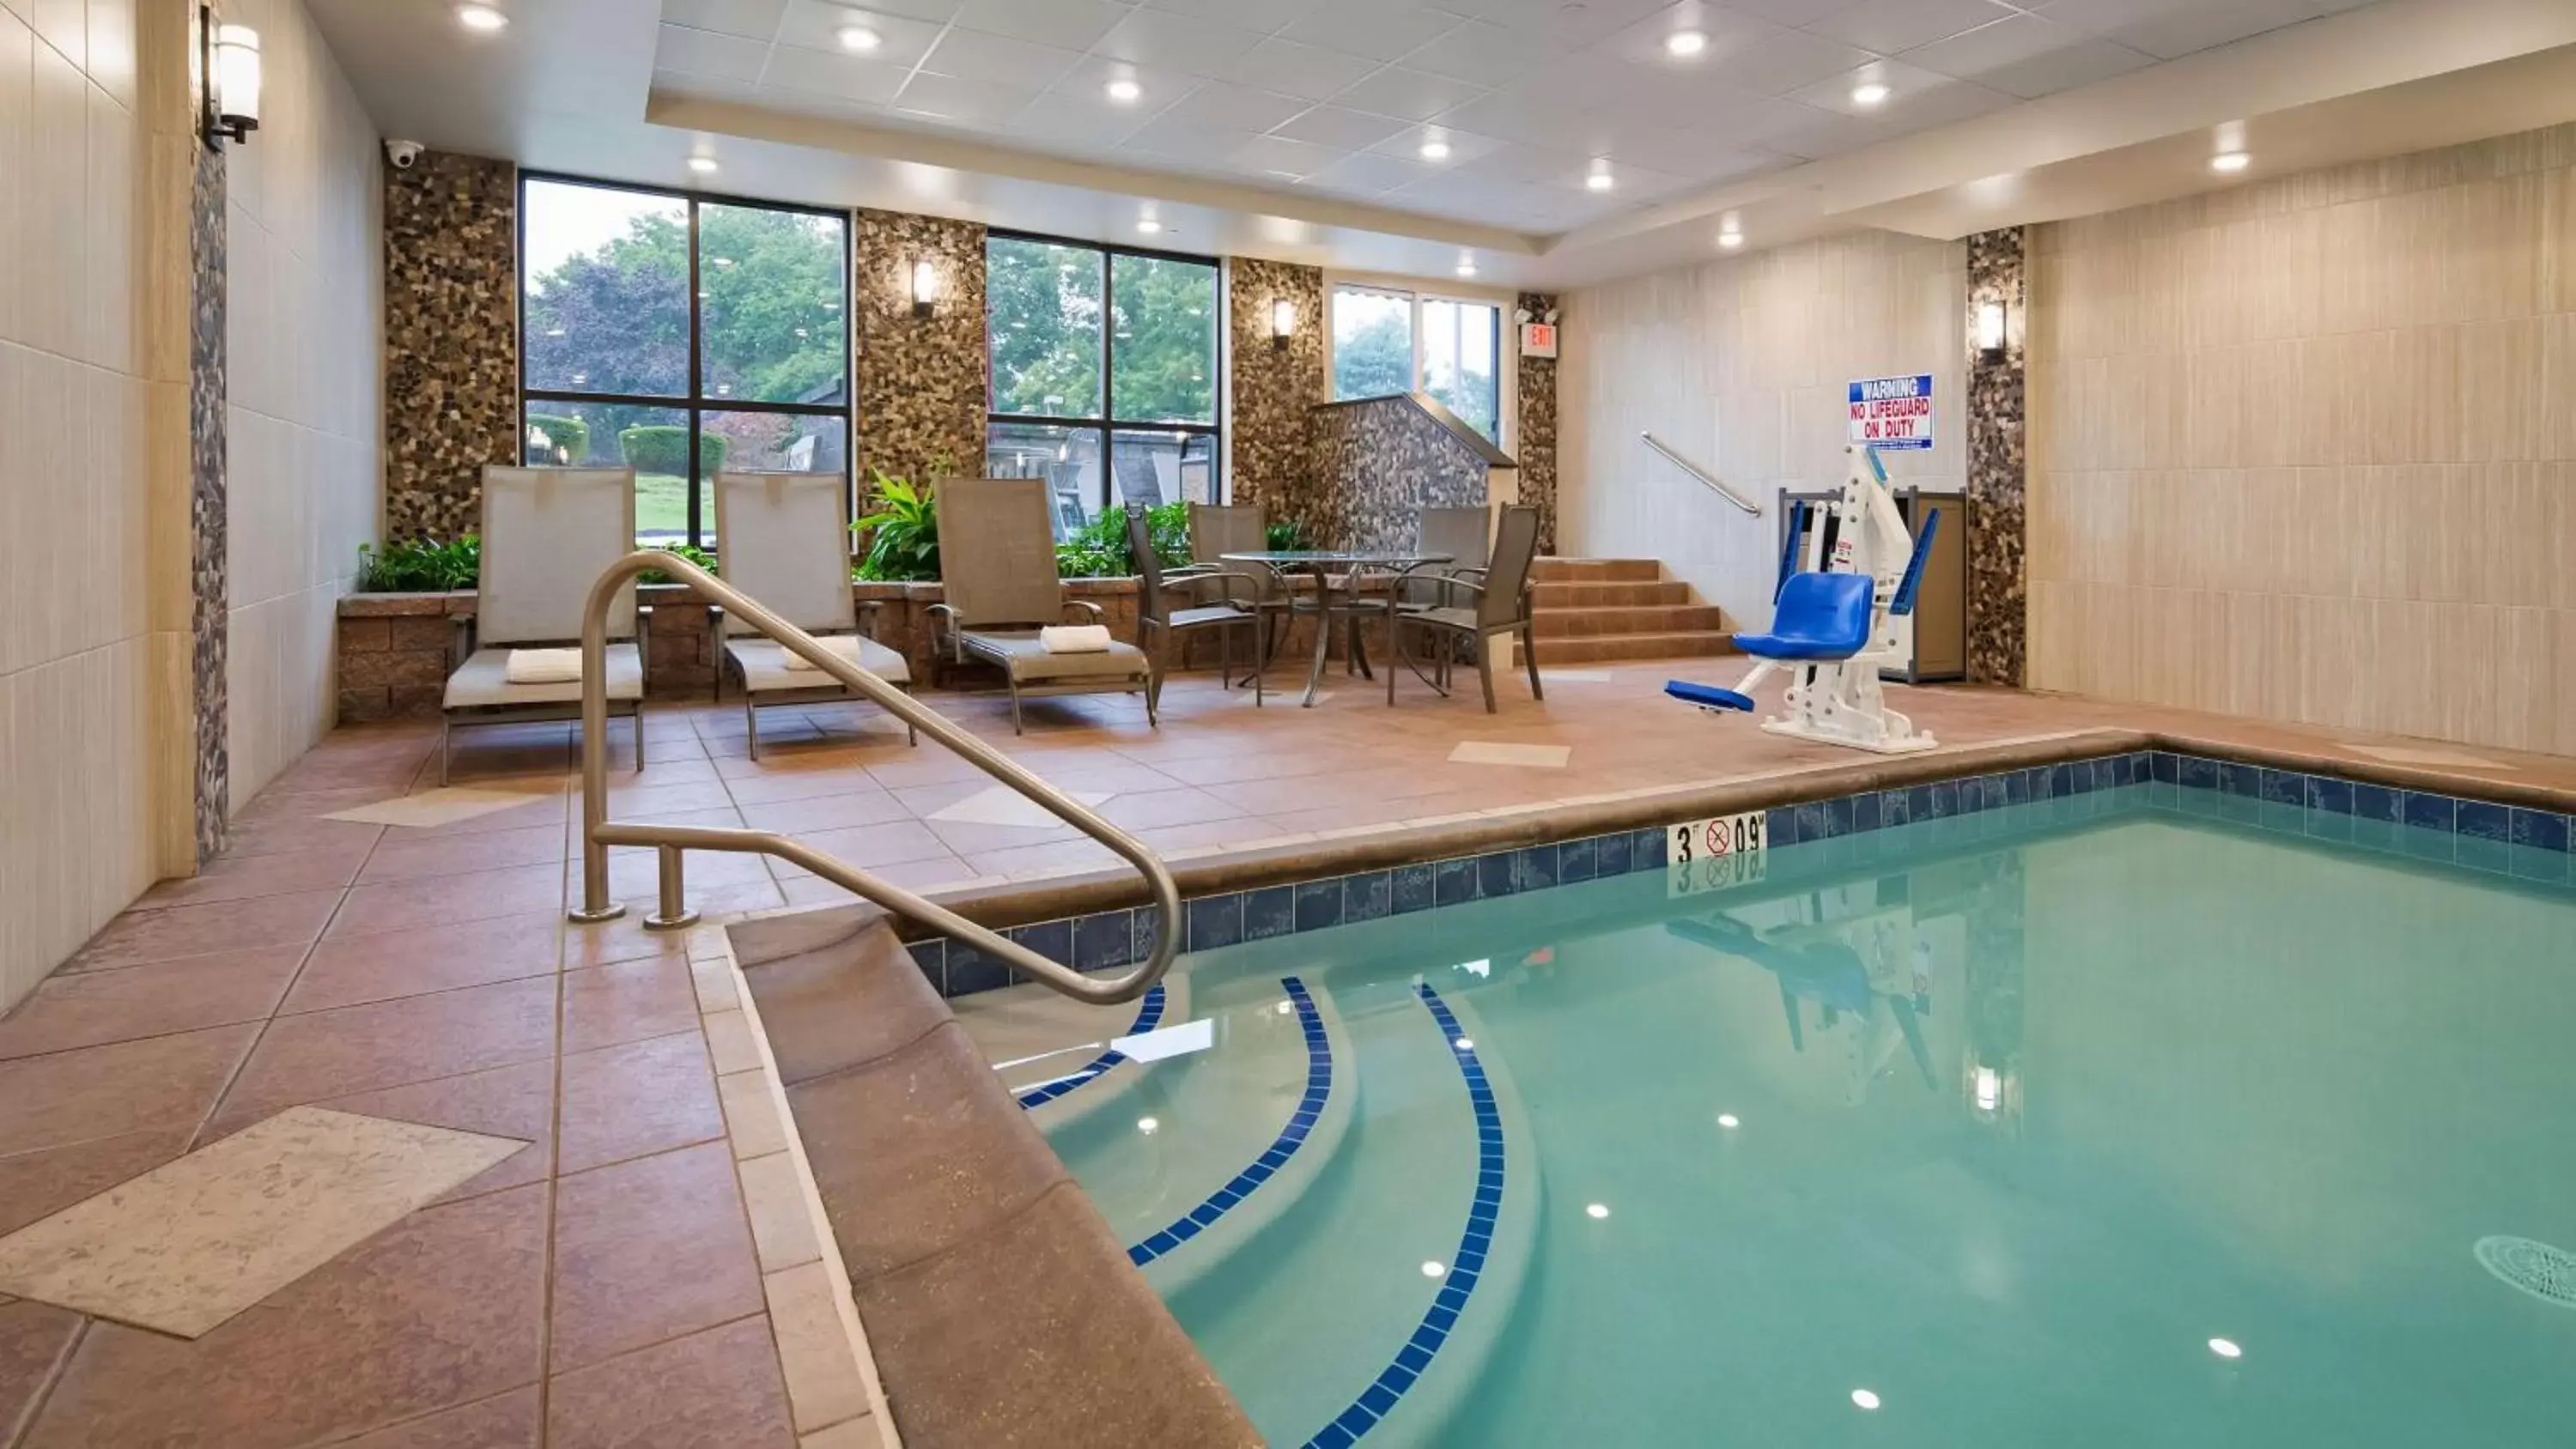 On site, Swimming Pool in Best Western Plus Concordville Hotel